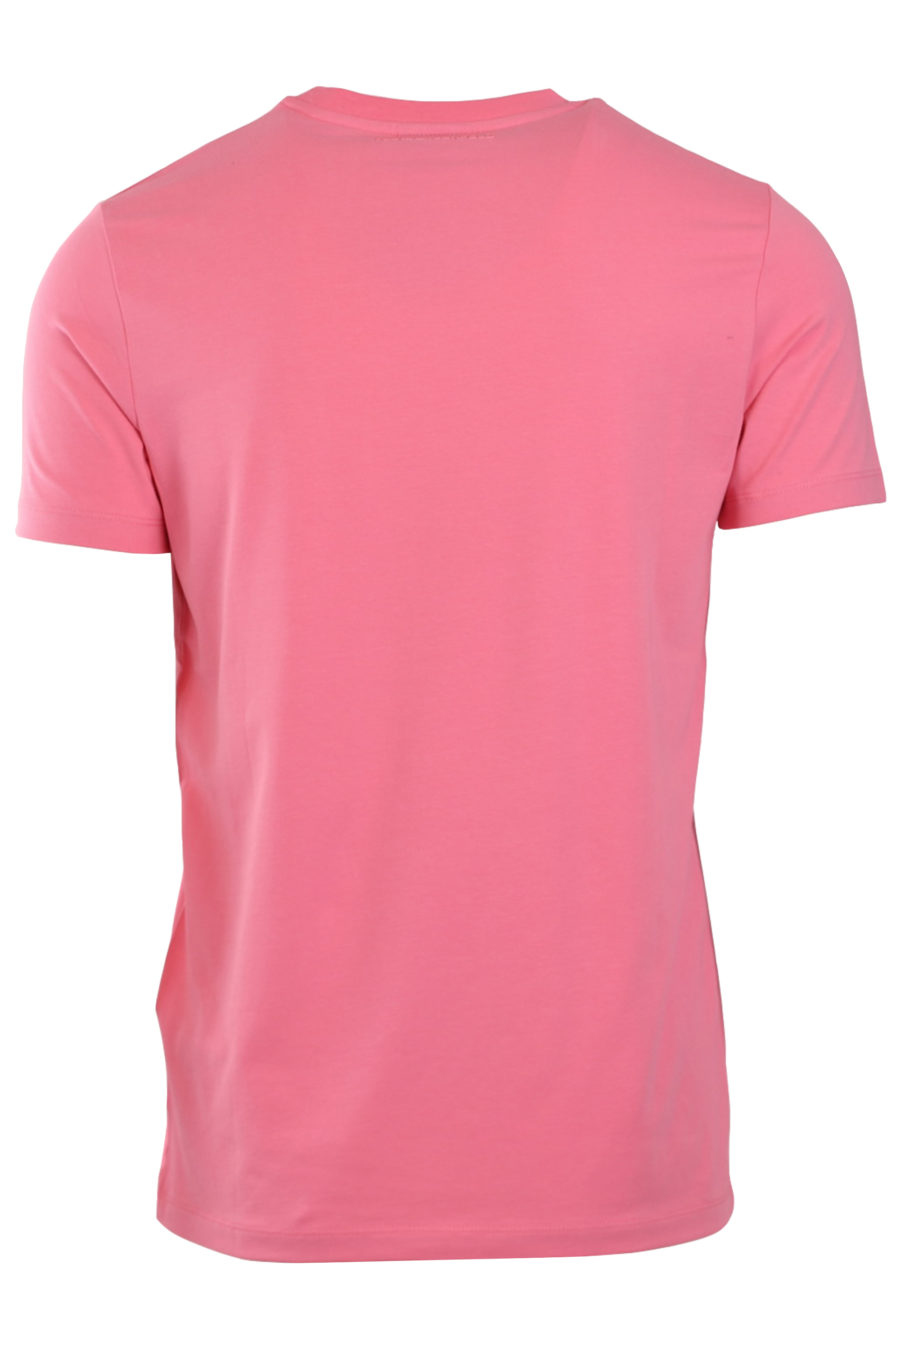 Camiseta de color rosa con logo engomado de Karl - 968f24de5bcc532788b507bdae27120b5665d611